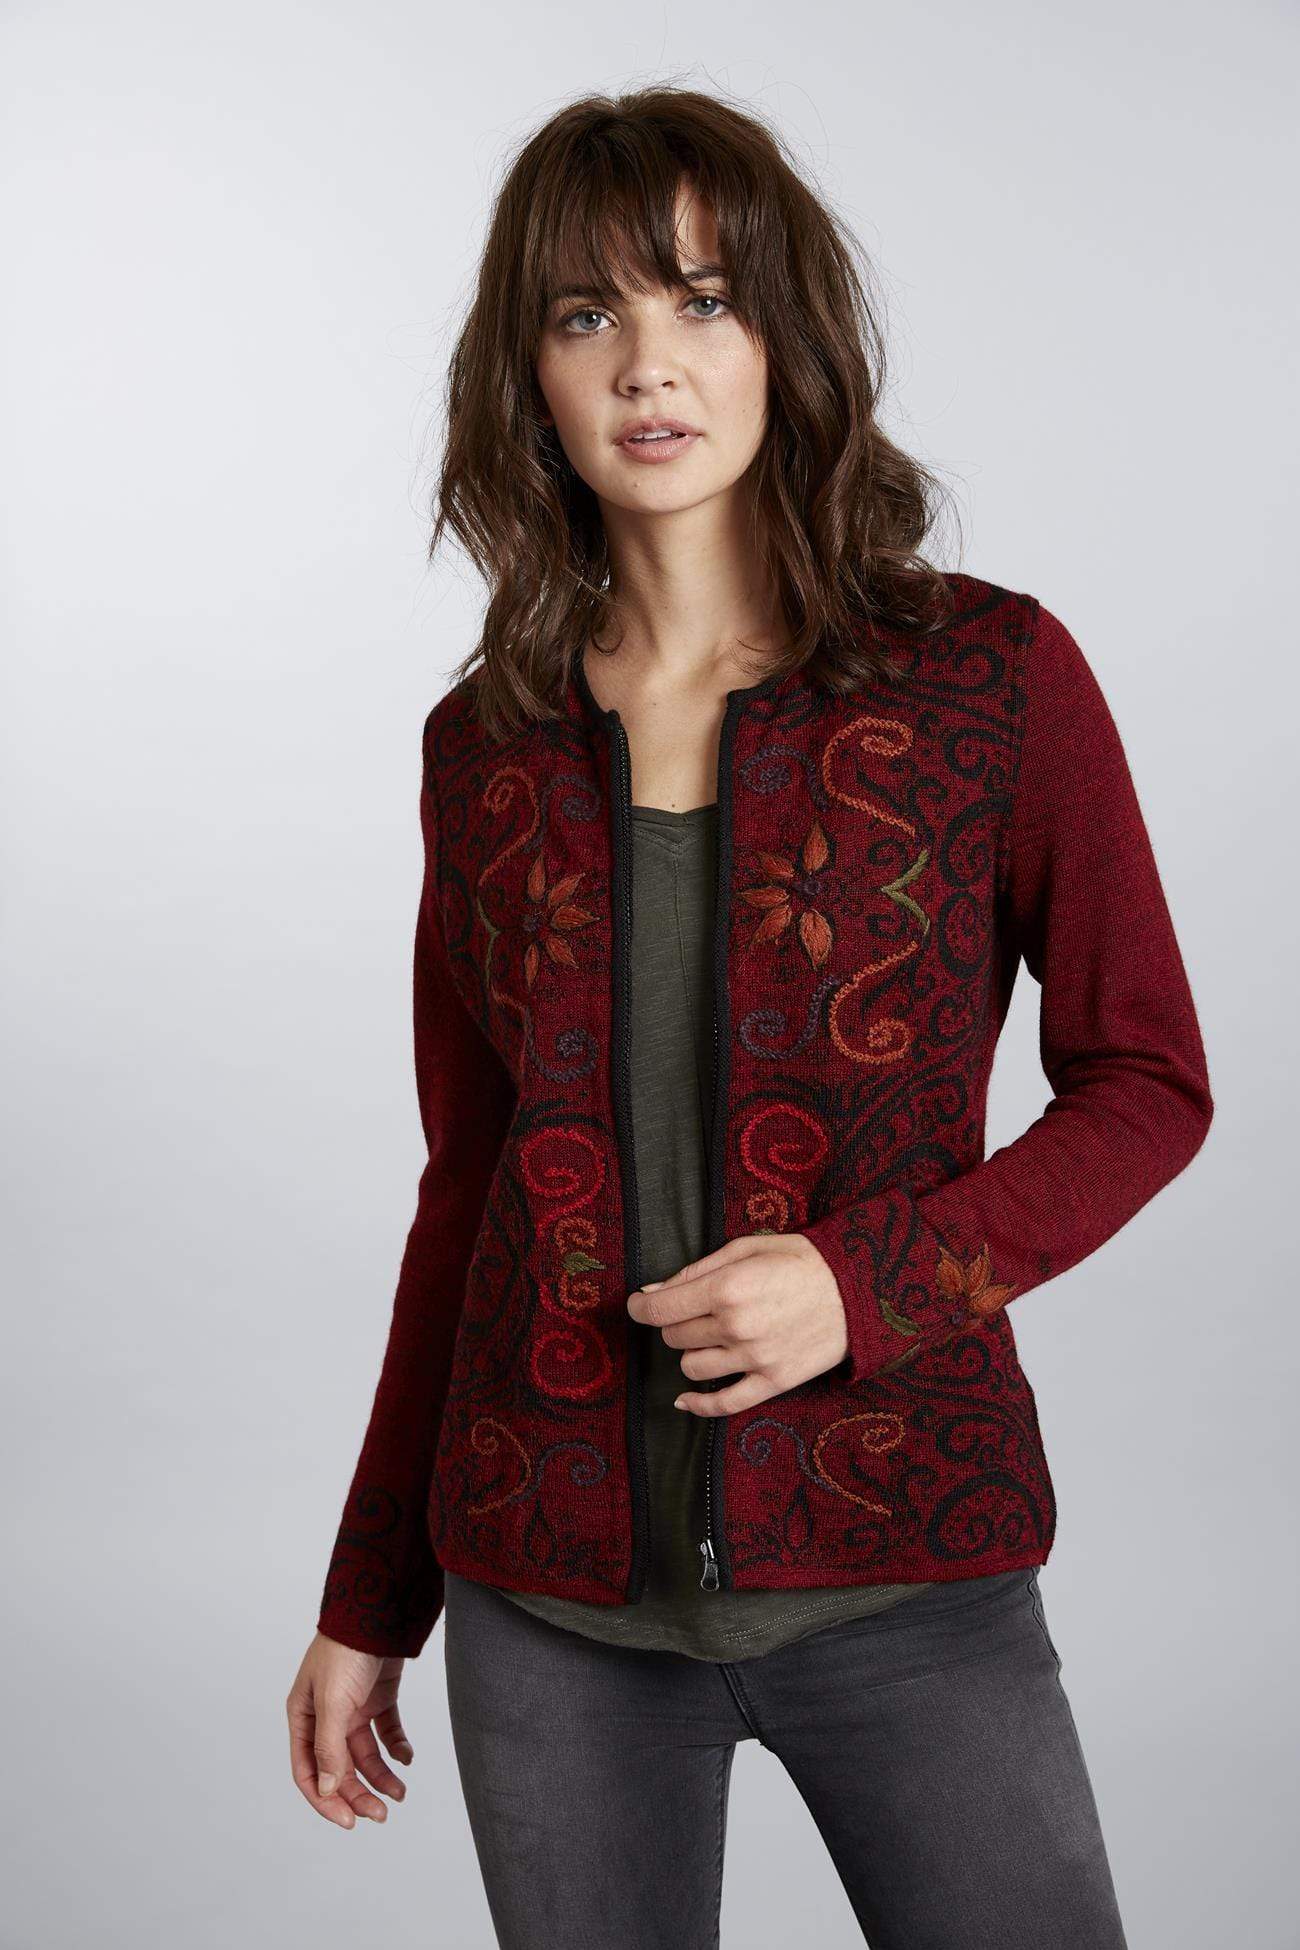 Arabesque Reversible Women's Baby Alpaca Sweater Embroidered